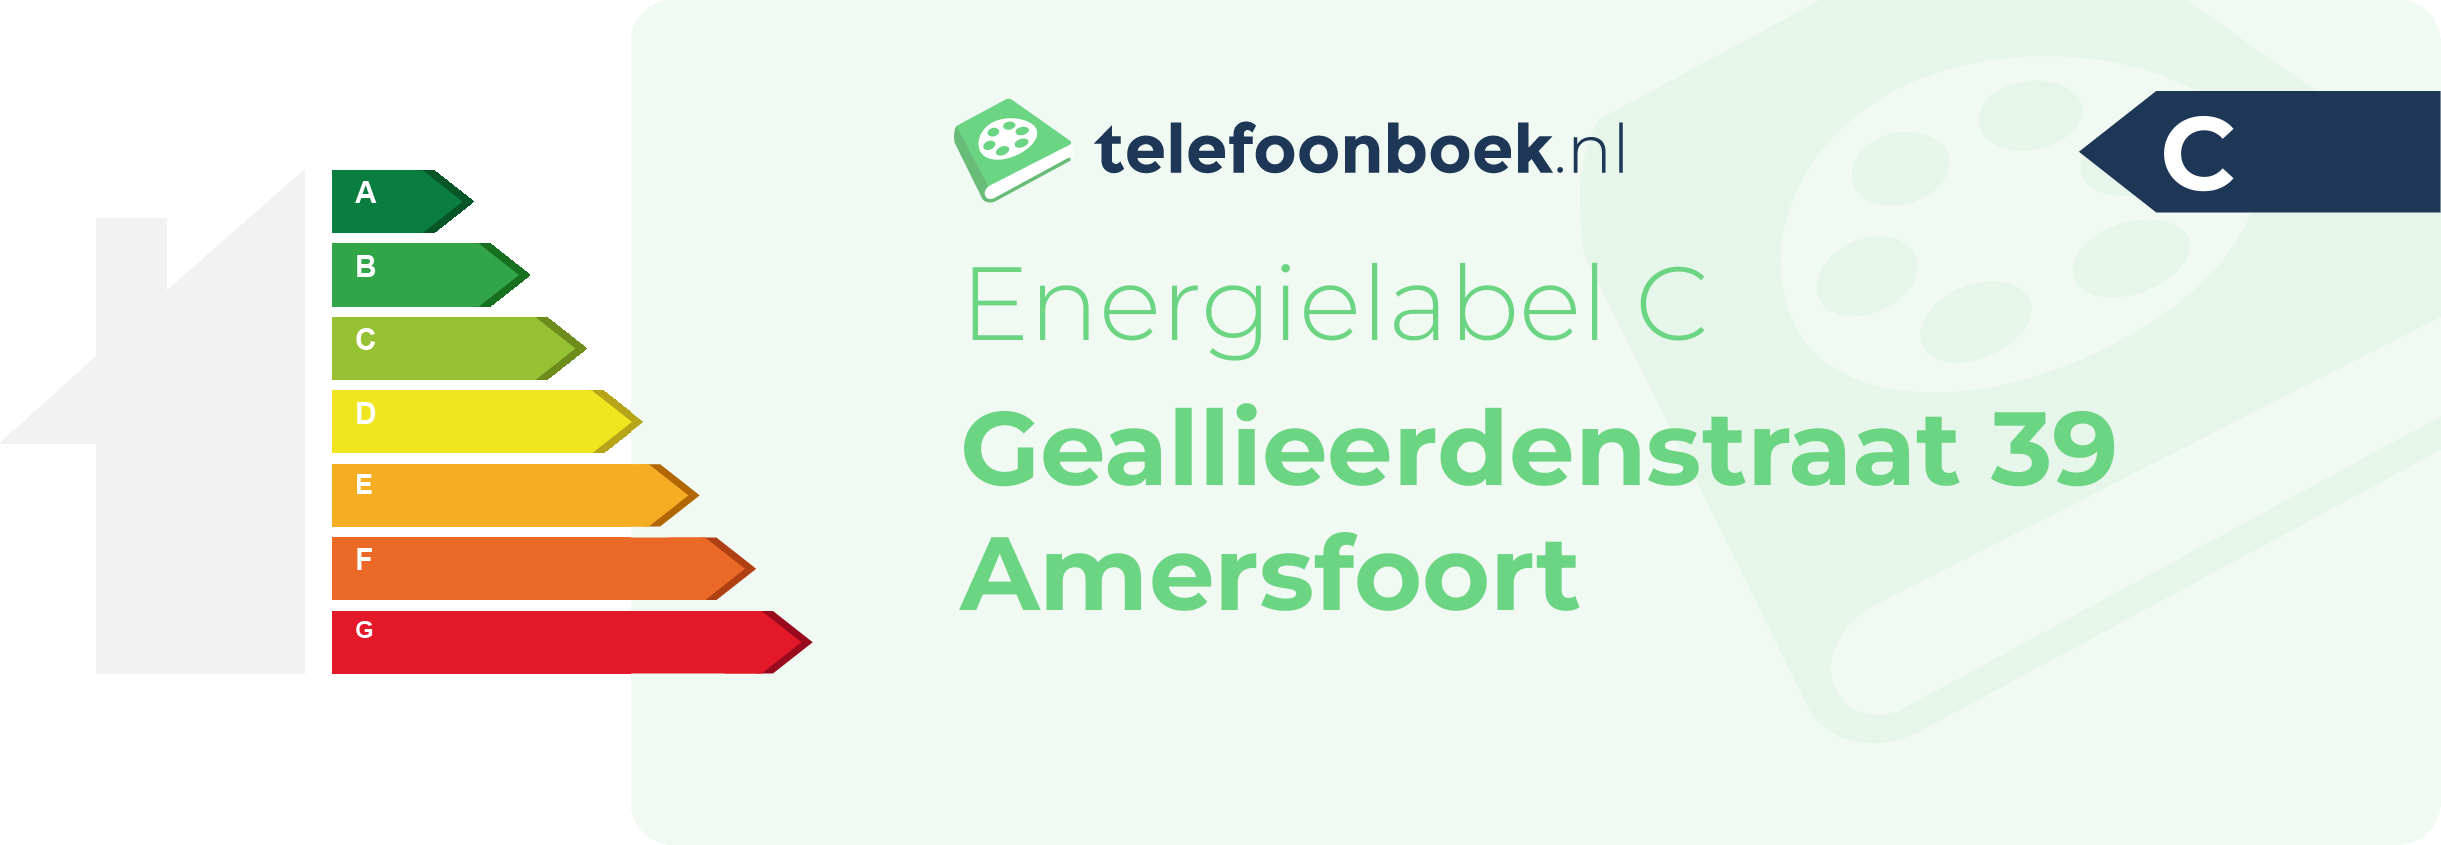 Energielabel Geallieerdenstraat 39 Amersfoort